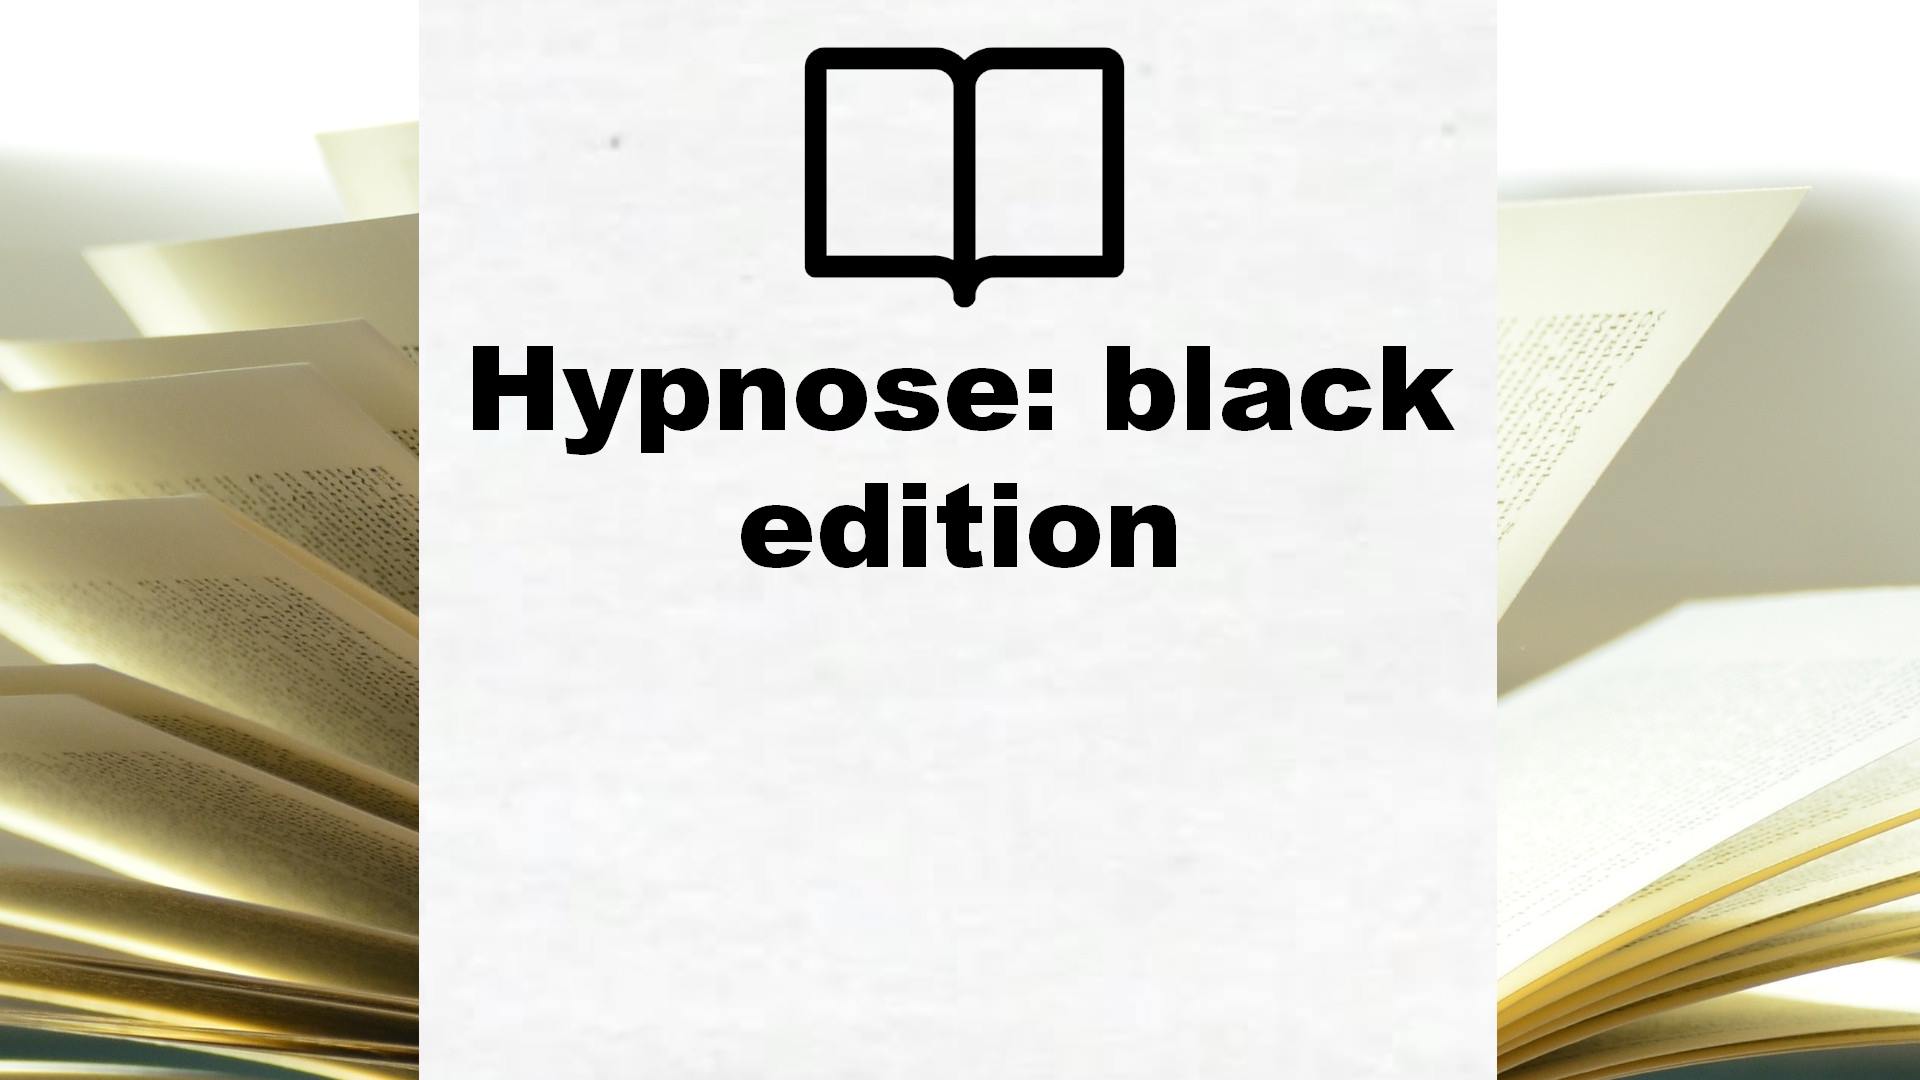 Hypnose: black edition – Boekrecensie